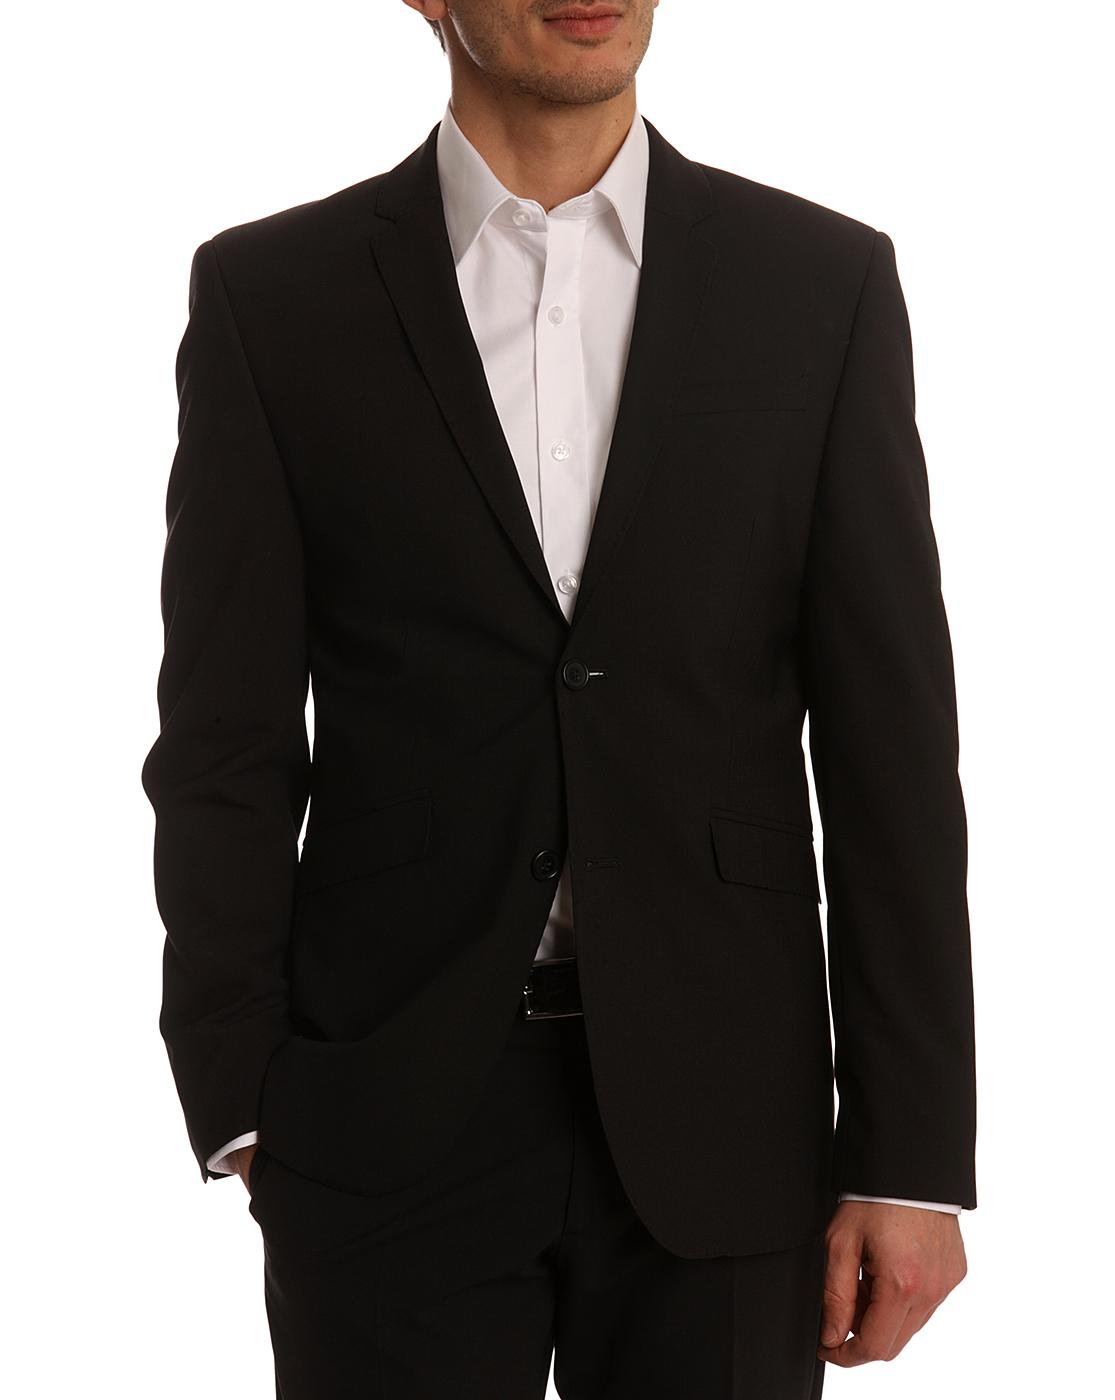 Foto Blazer negra de traje One Repone Suit